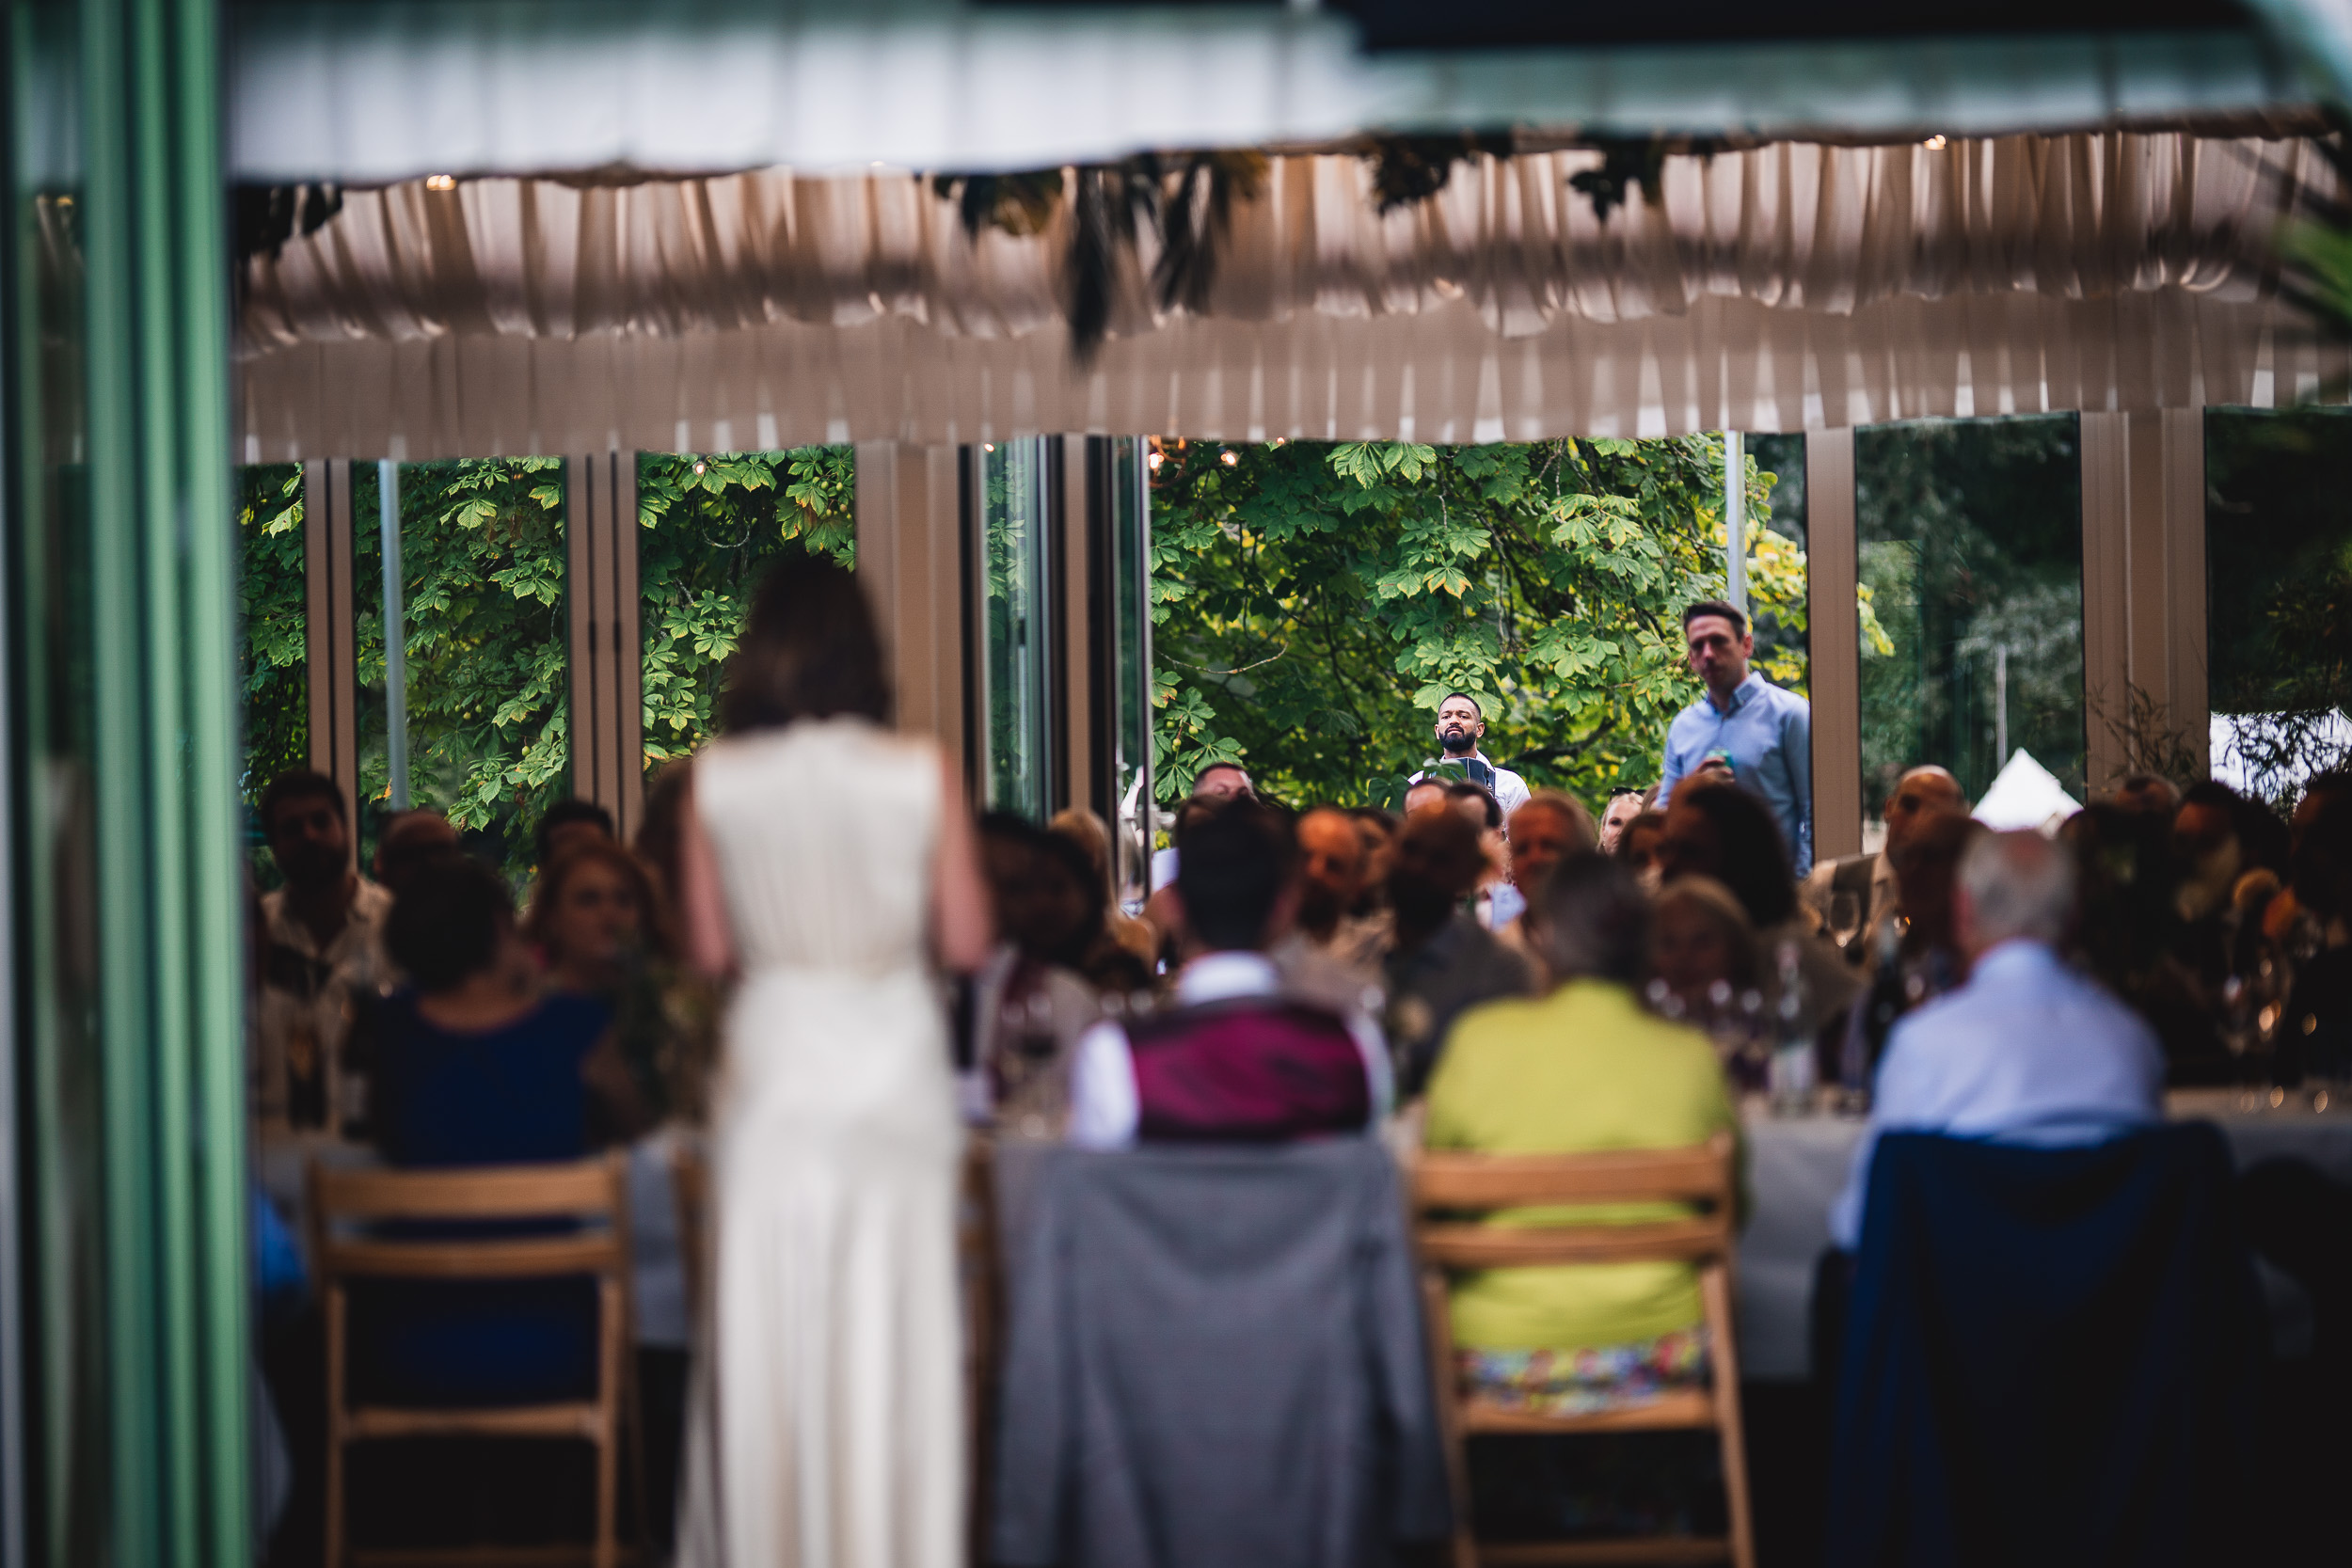 A beautiful Surrey wedding reception in the scenic gardens of Ridge Farm, showcasing a happy bride and groom.